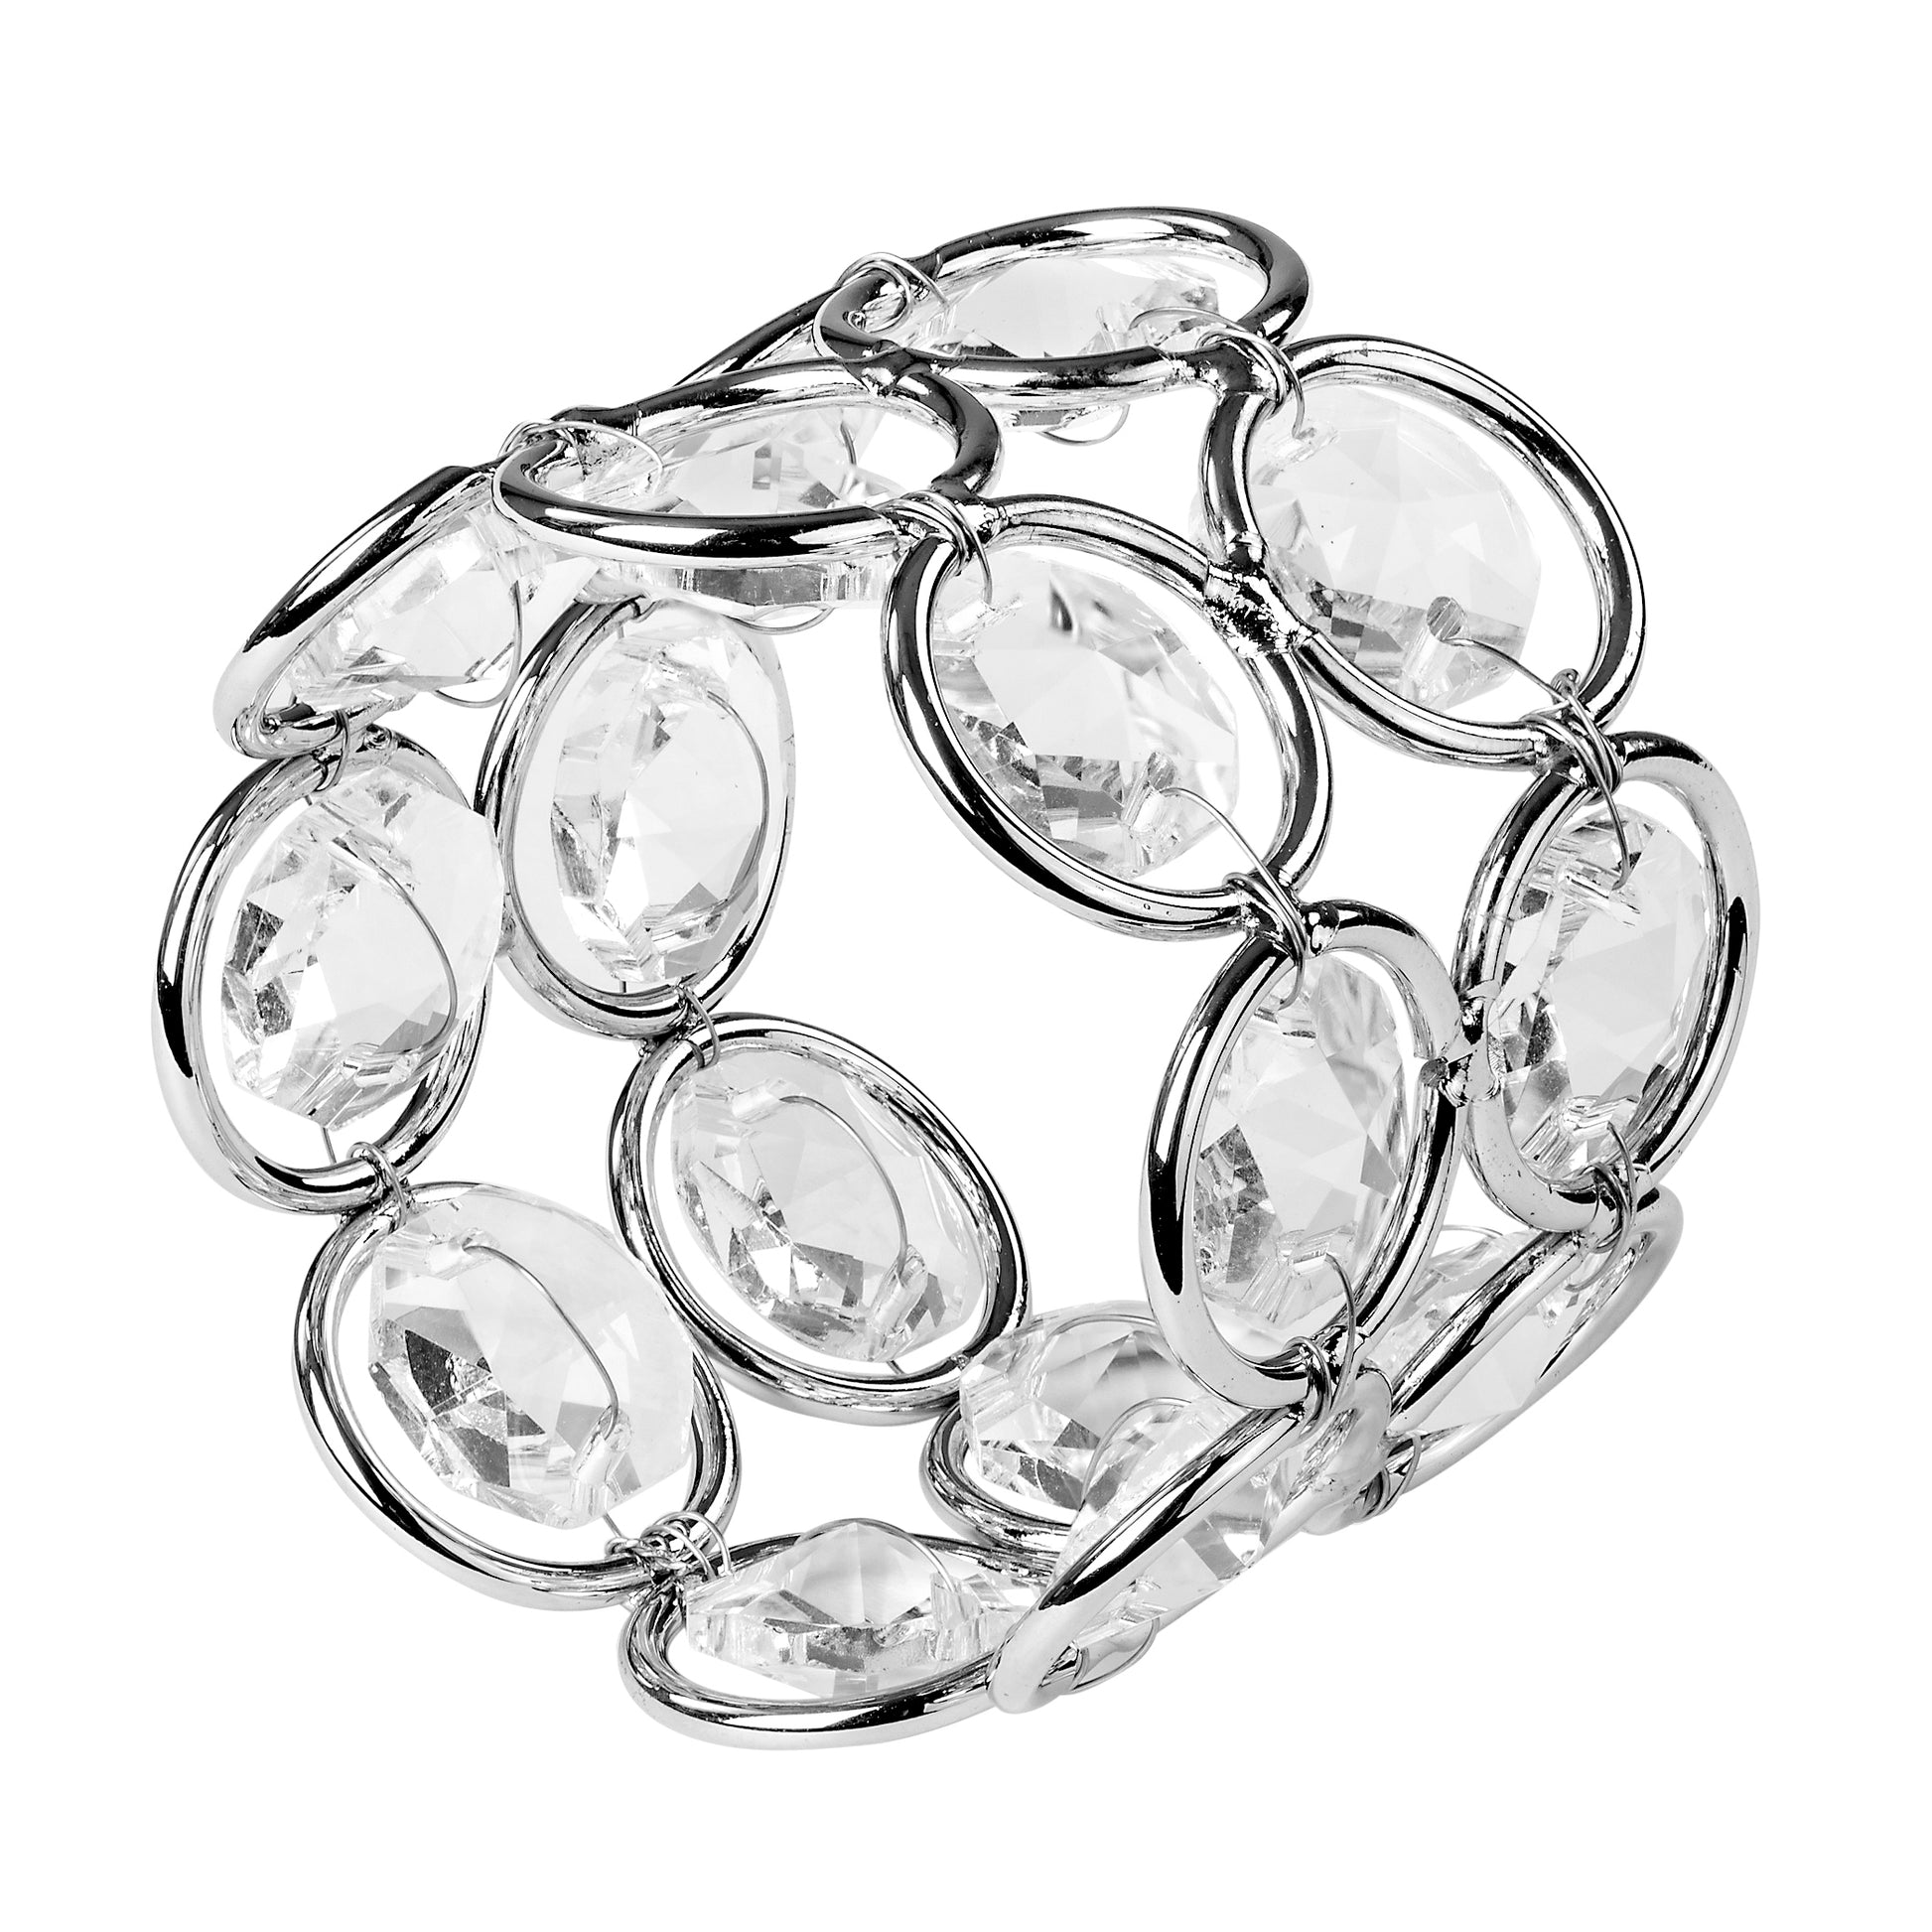 10 pc/pk Crystal Napkin Ring - Silver